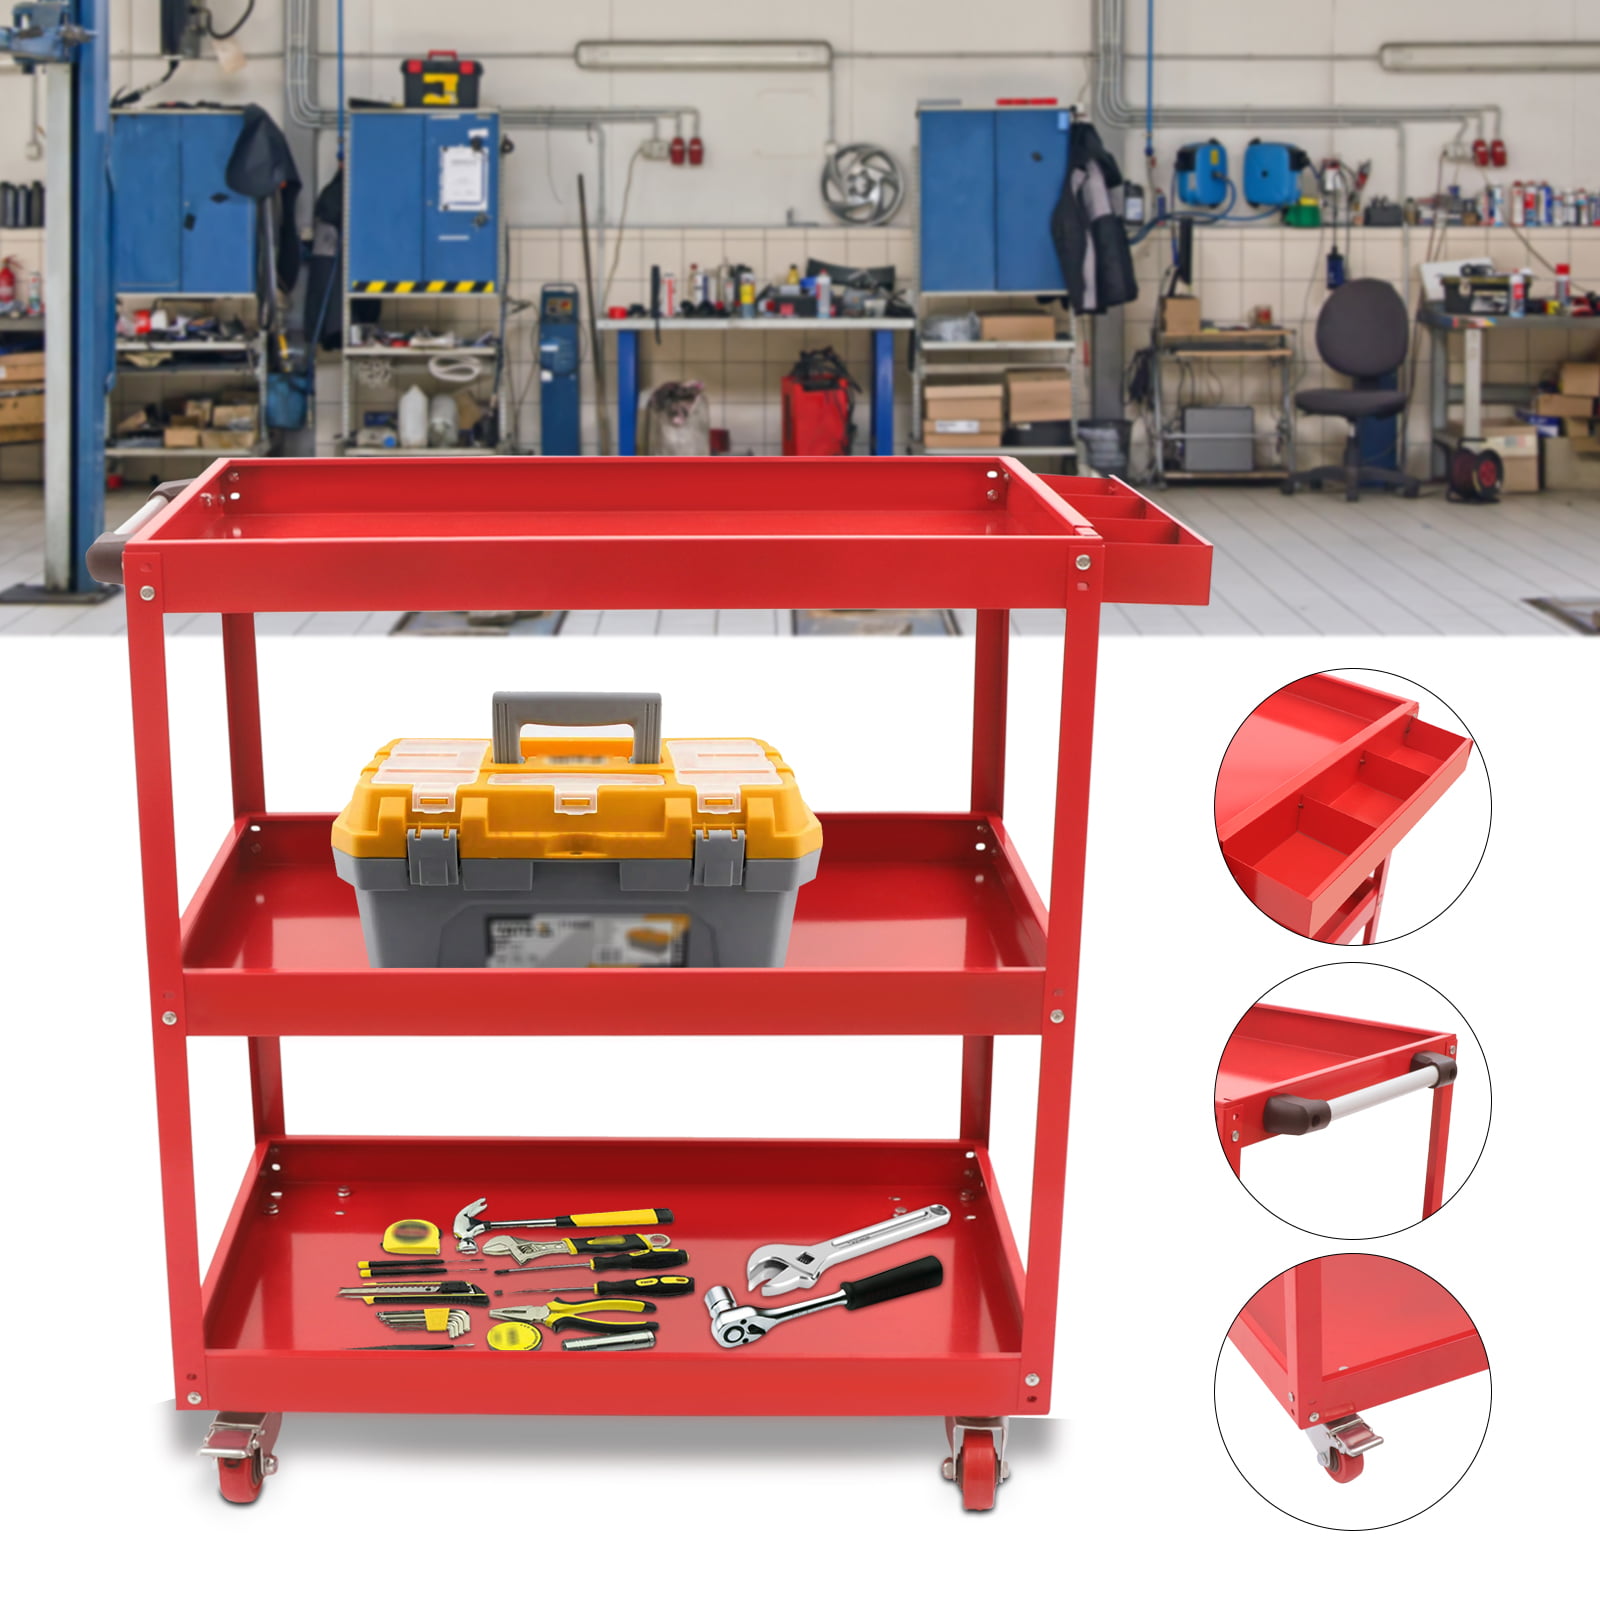 Recent tool cart setup for shop work. : r/Tools